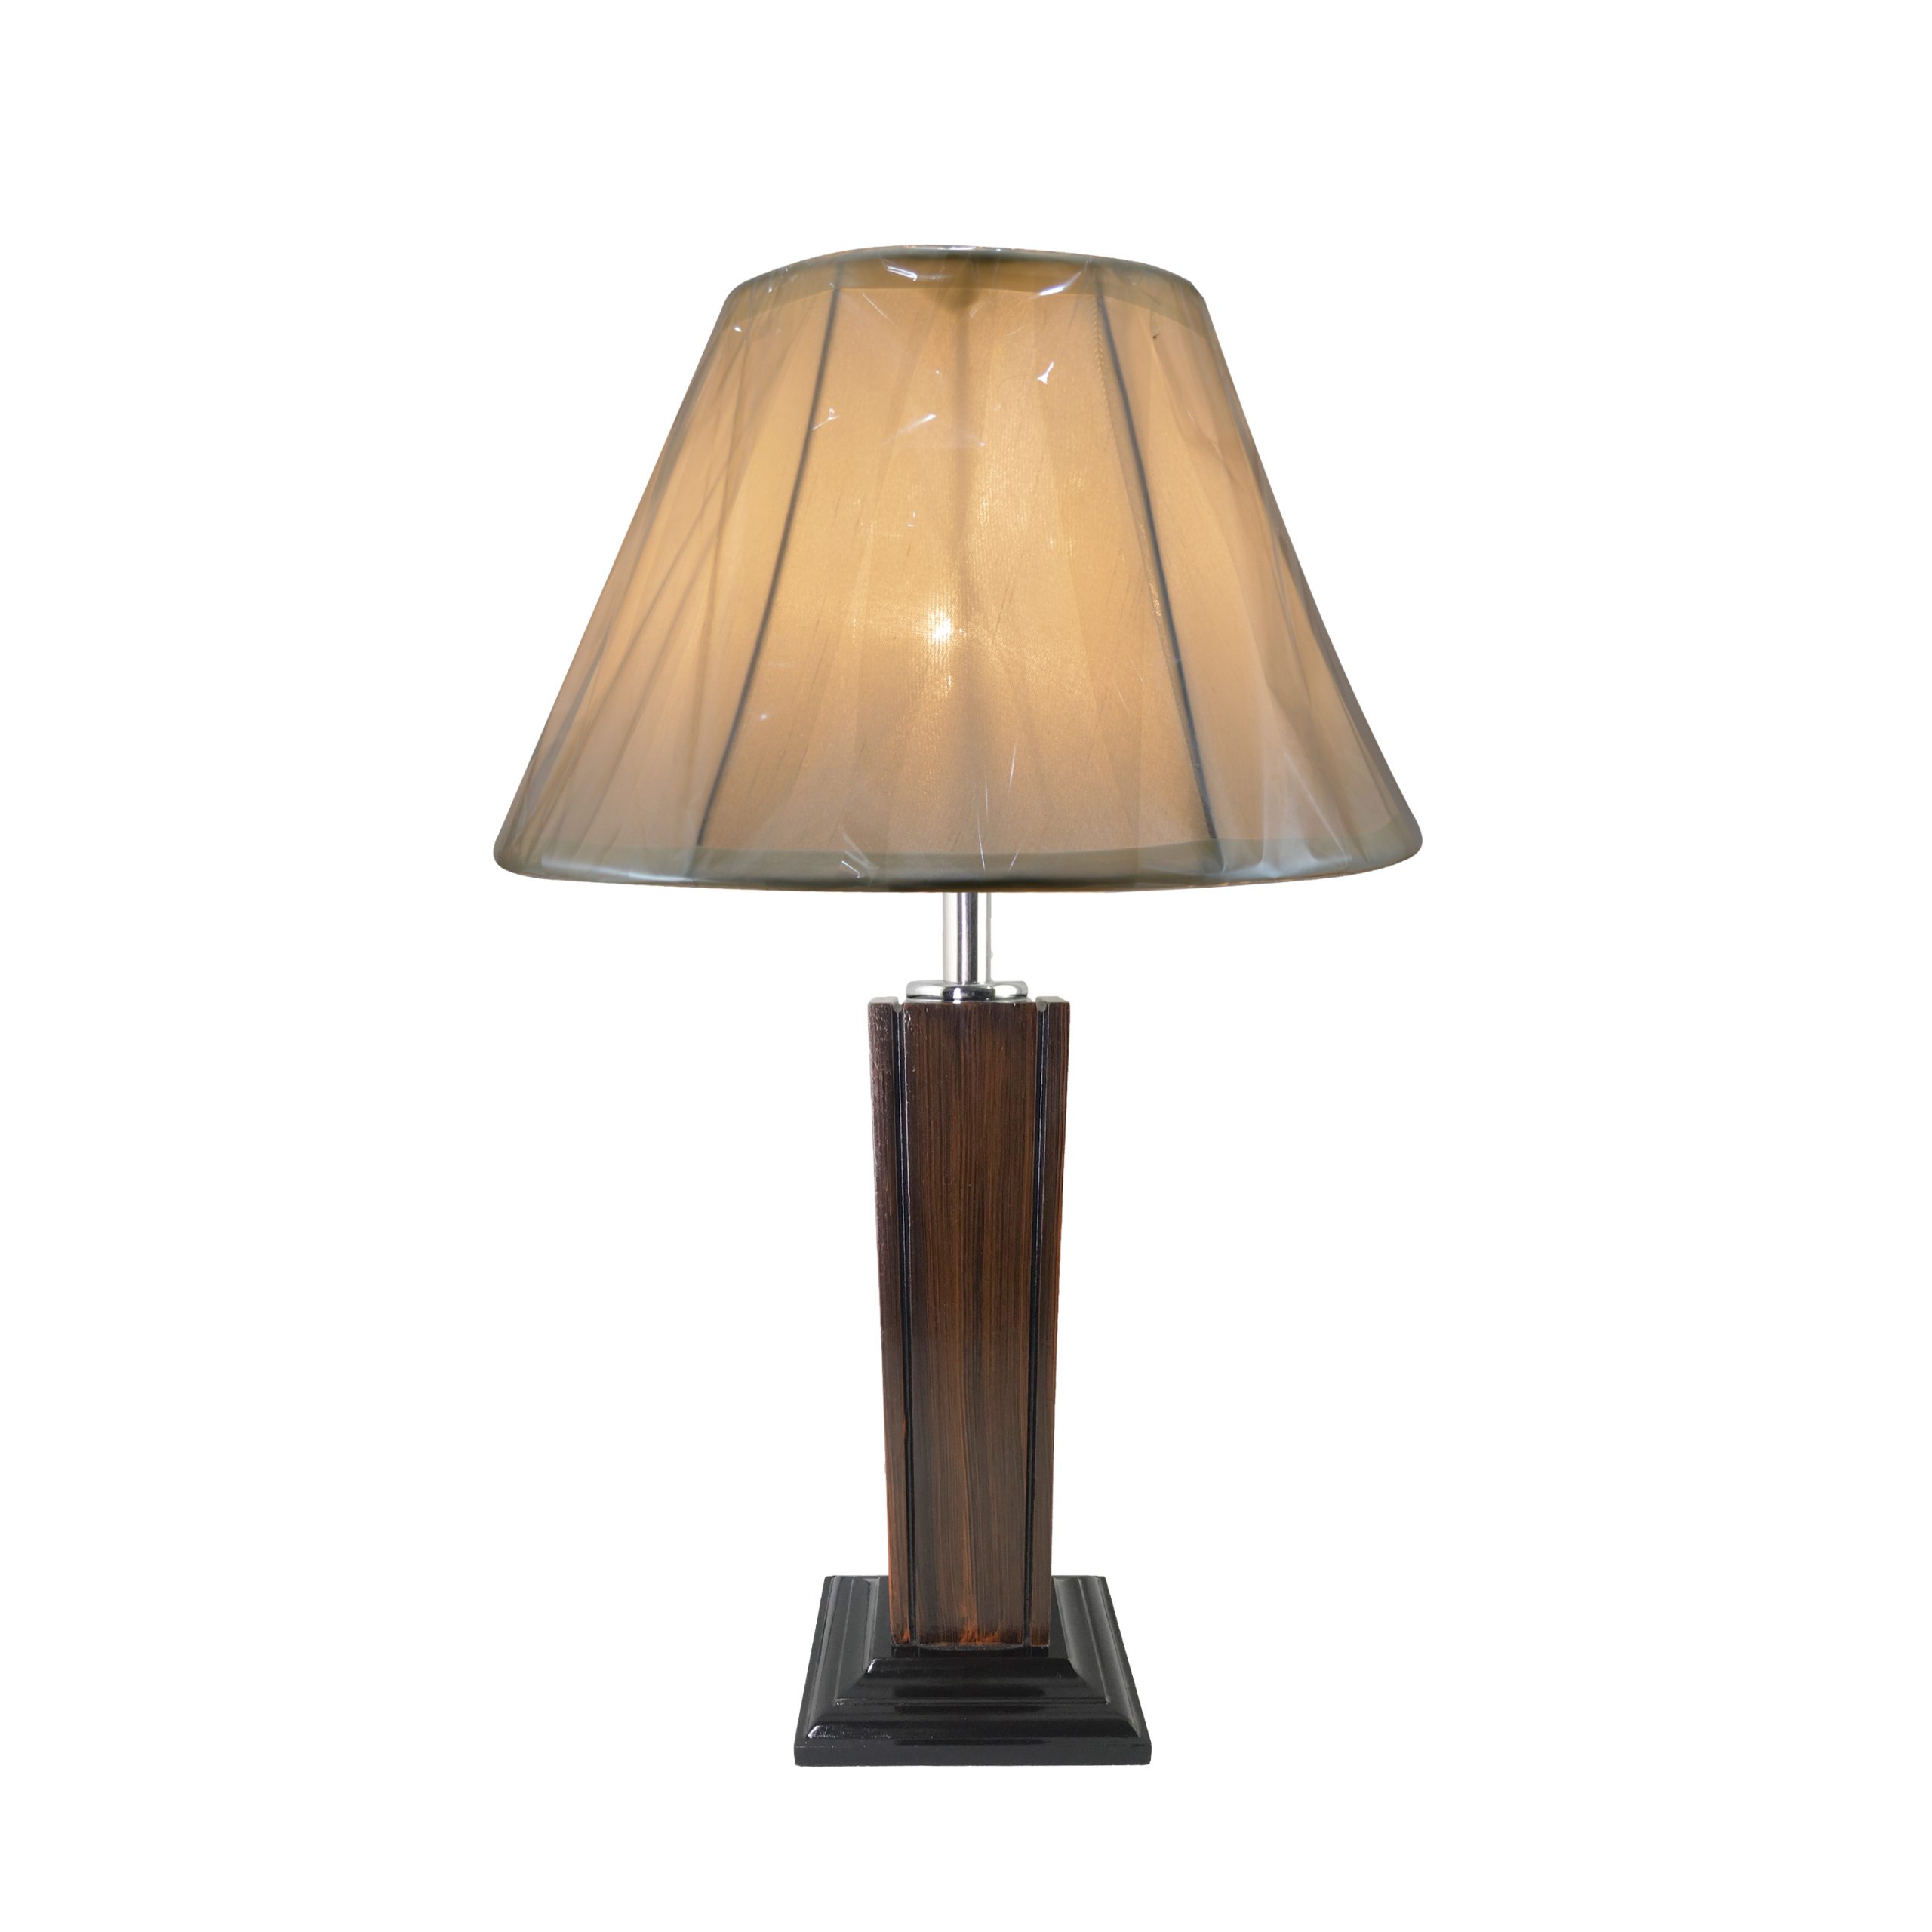 Lamp-5-5-scaled-1.jpg